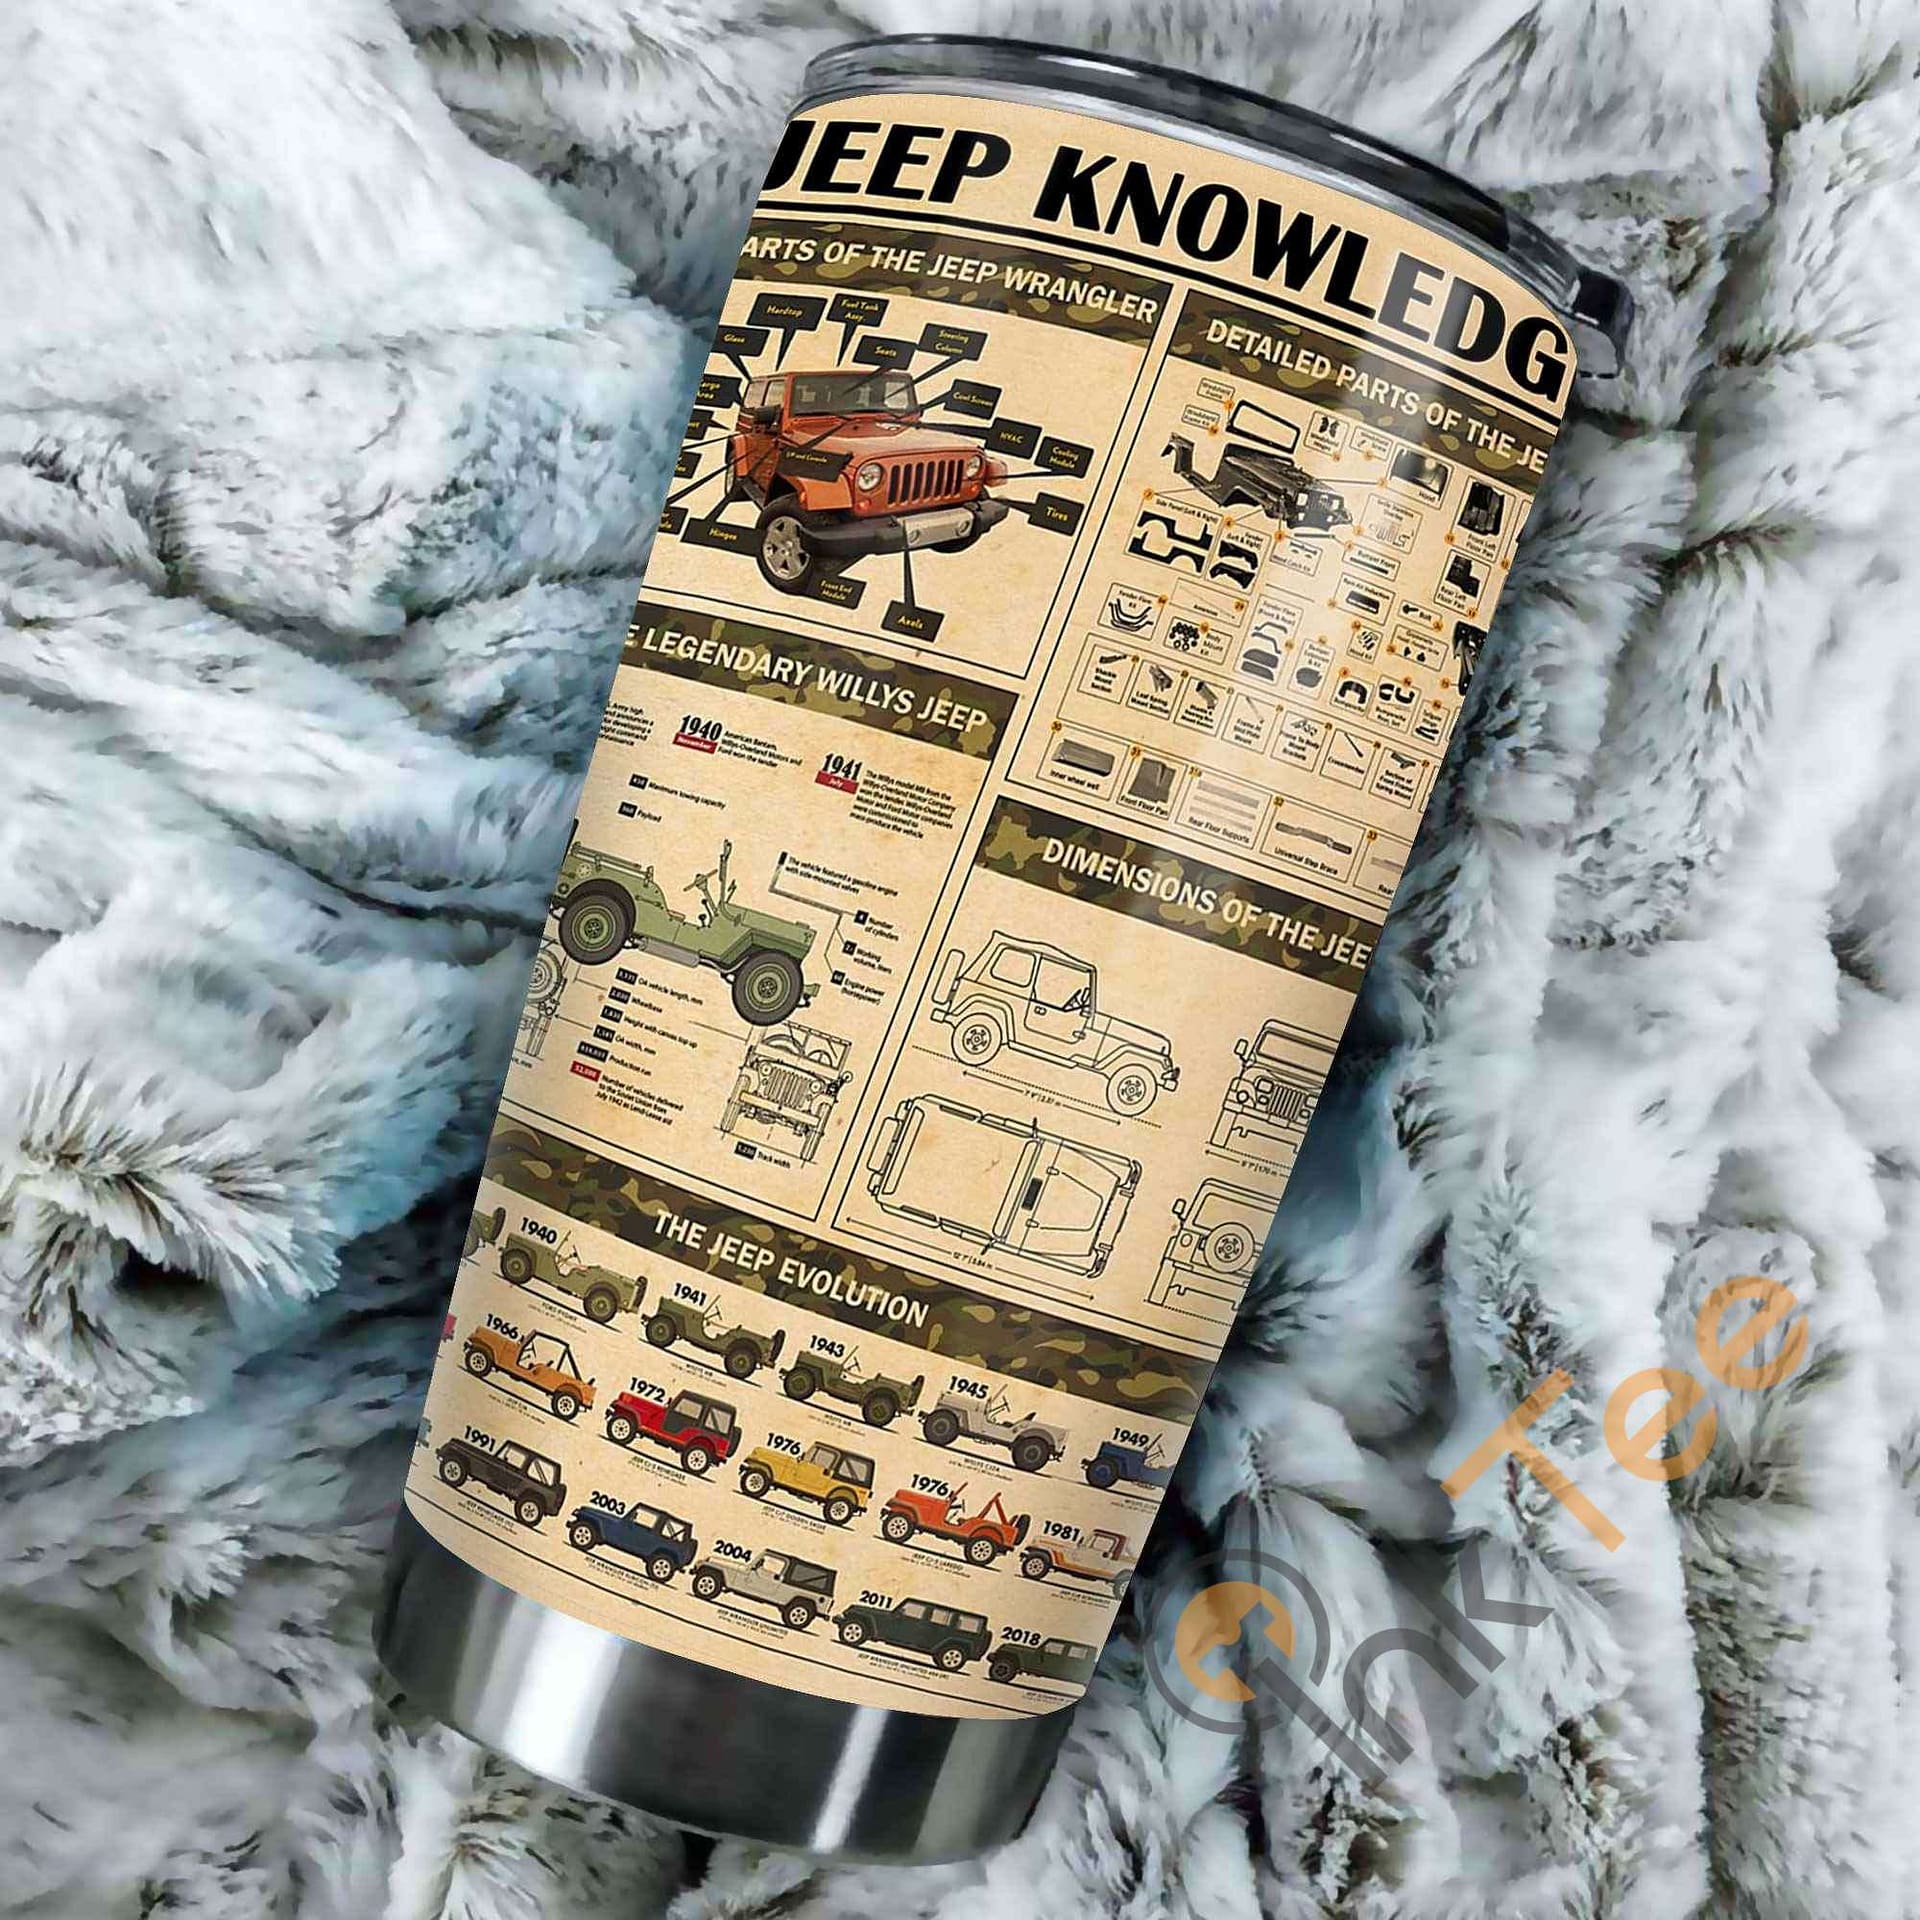 Jeep Knowledge Amazon Best Seller Sku 3434 Stainless Steel Tumbler